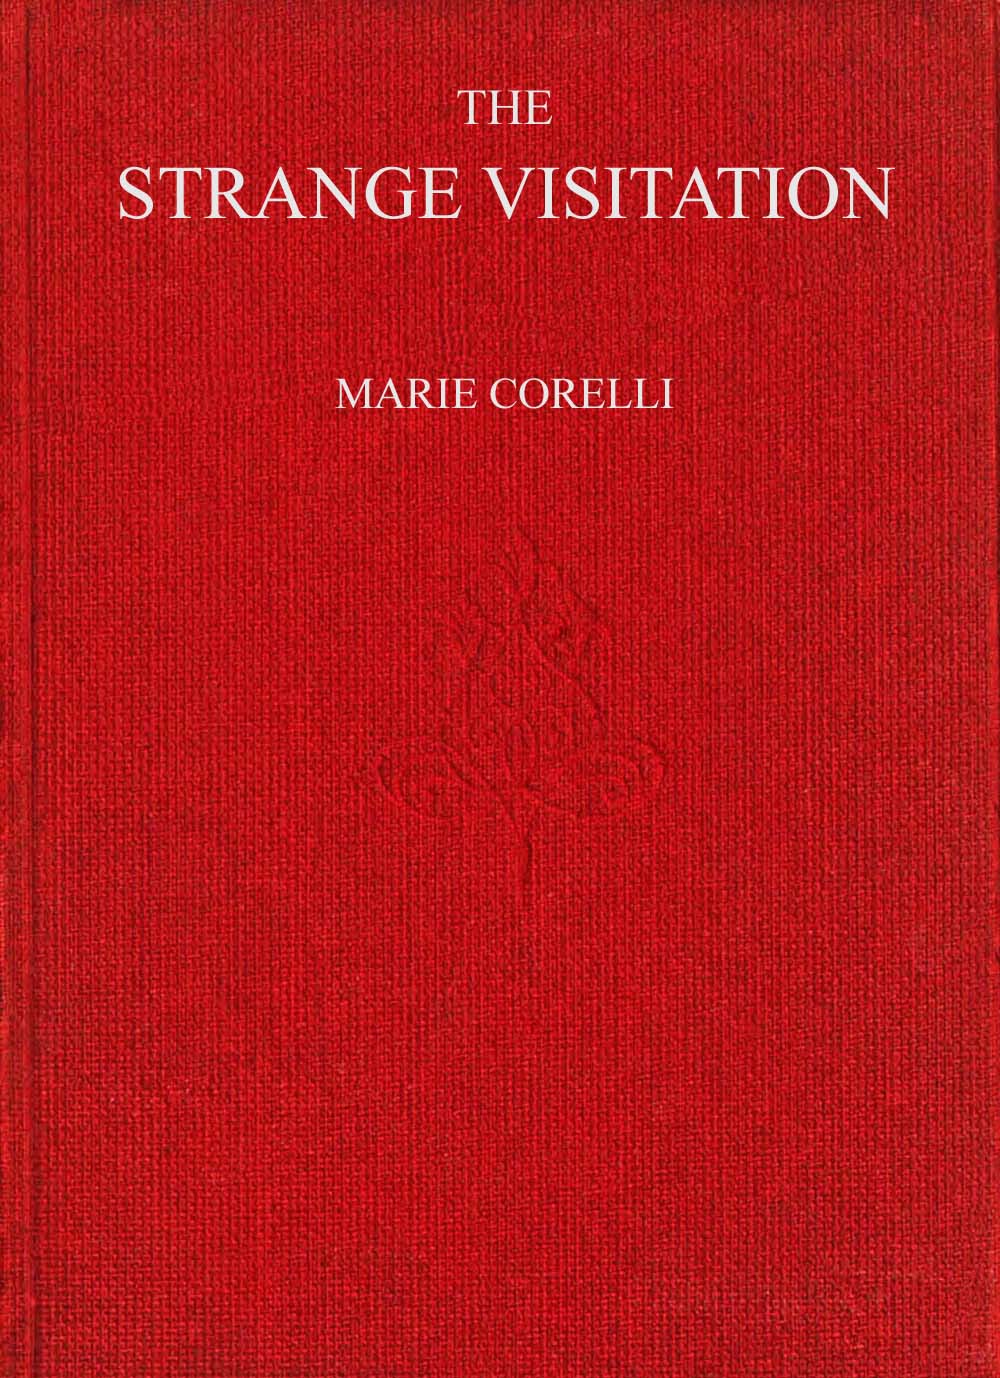 The Strange Visitation